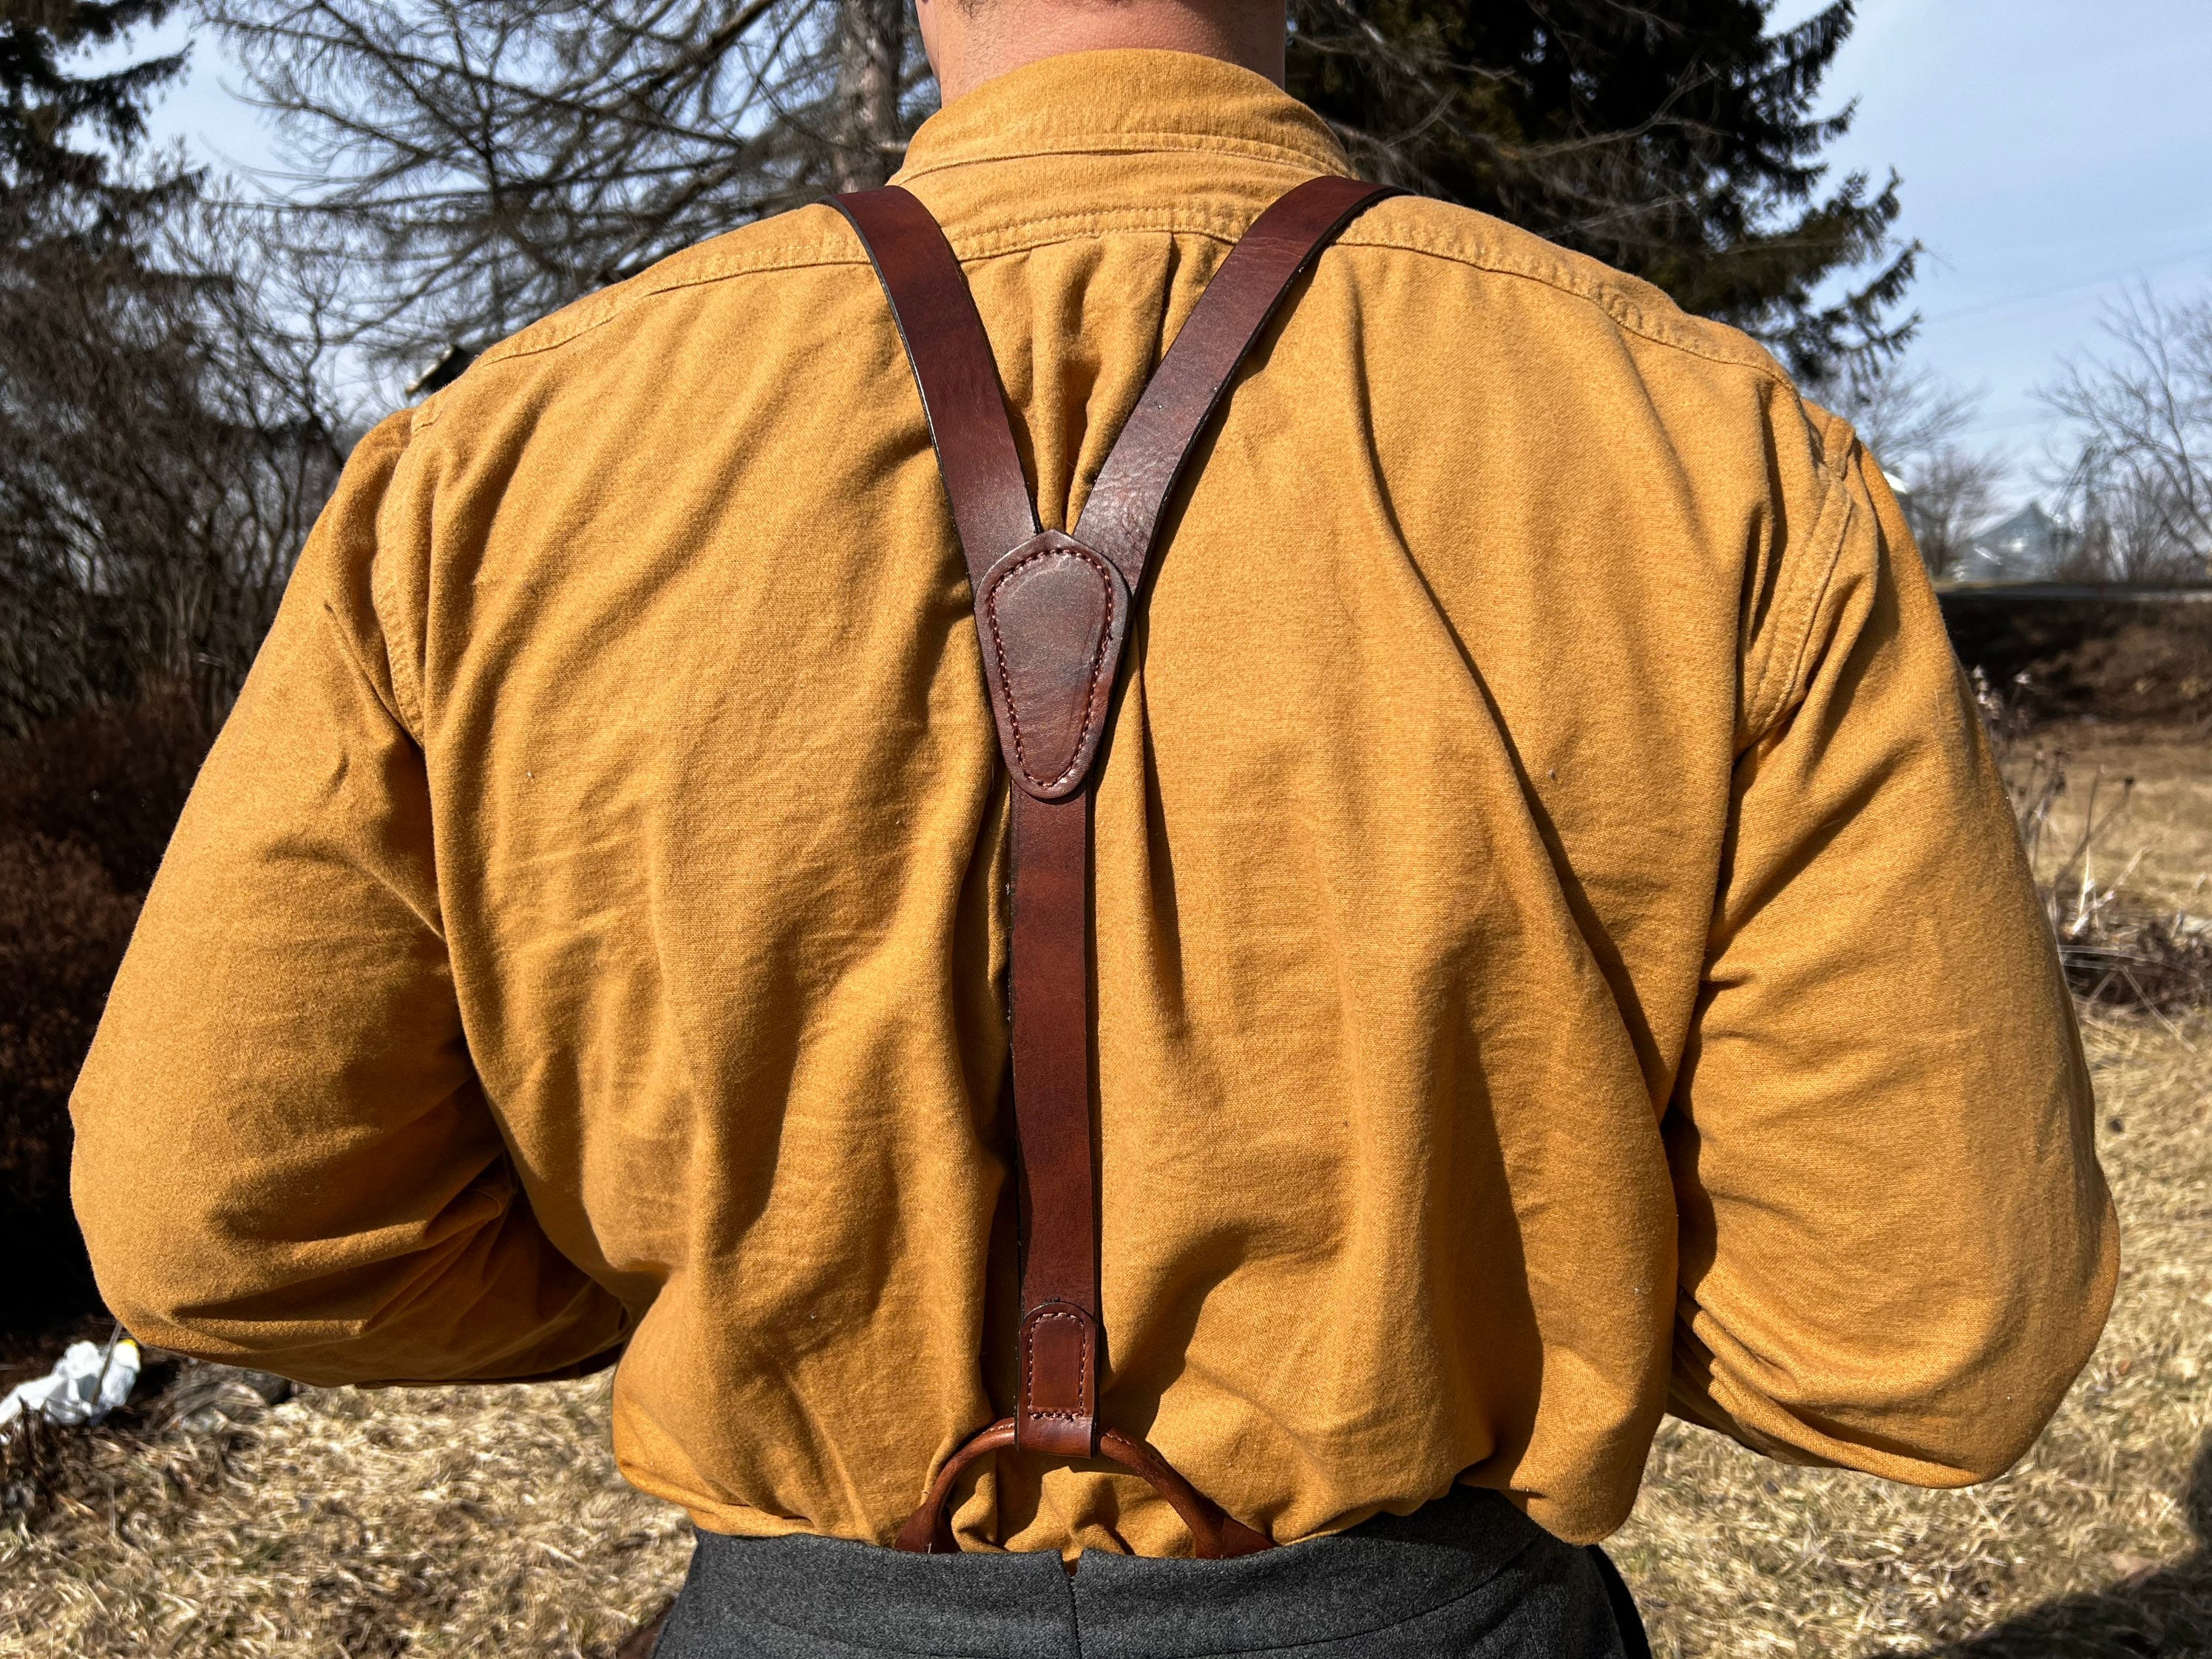 New Lesther Cowboy Wedtetn Suspenders - Men's accessories